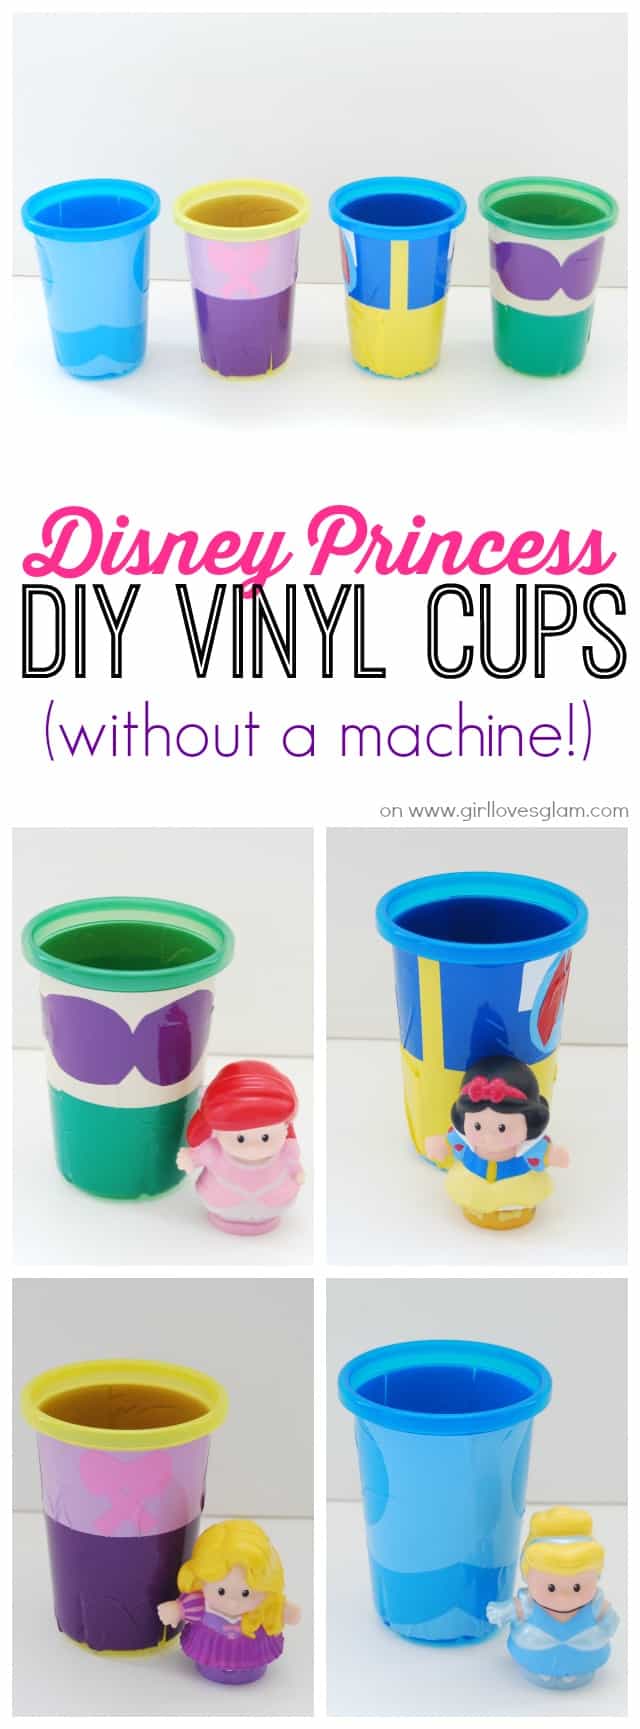 Disney Princess DIY Vinyl Cups on www.girllovesglam.com